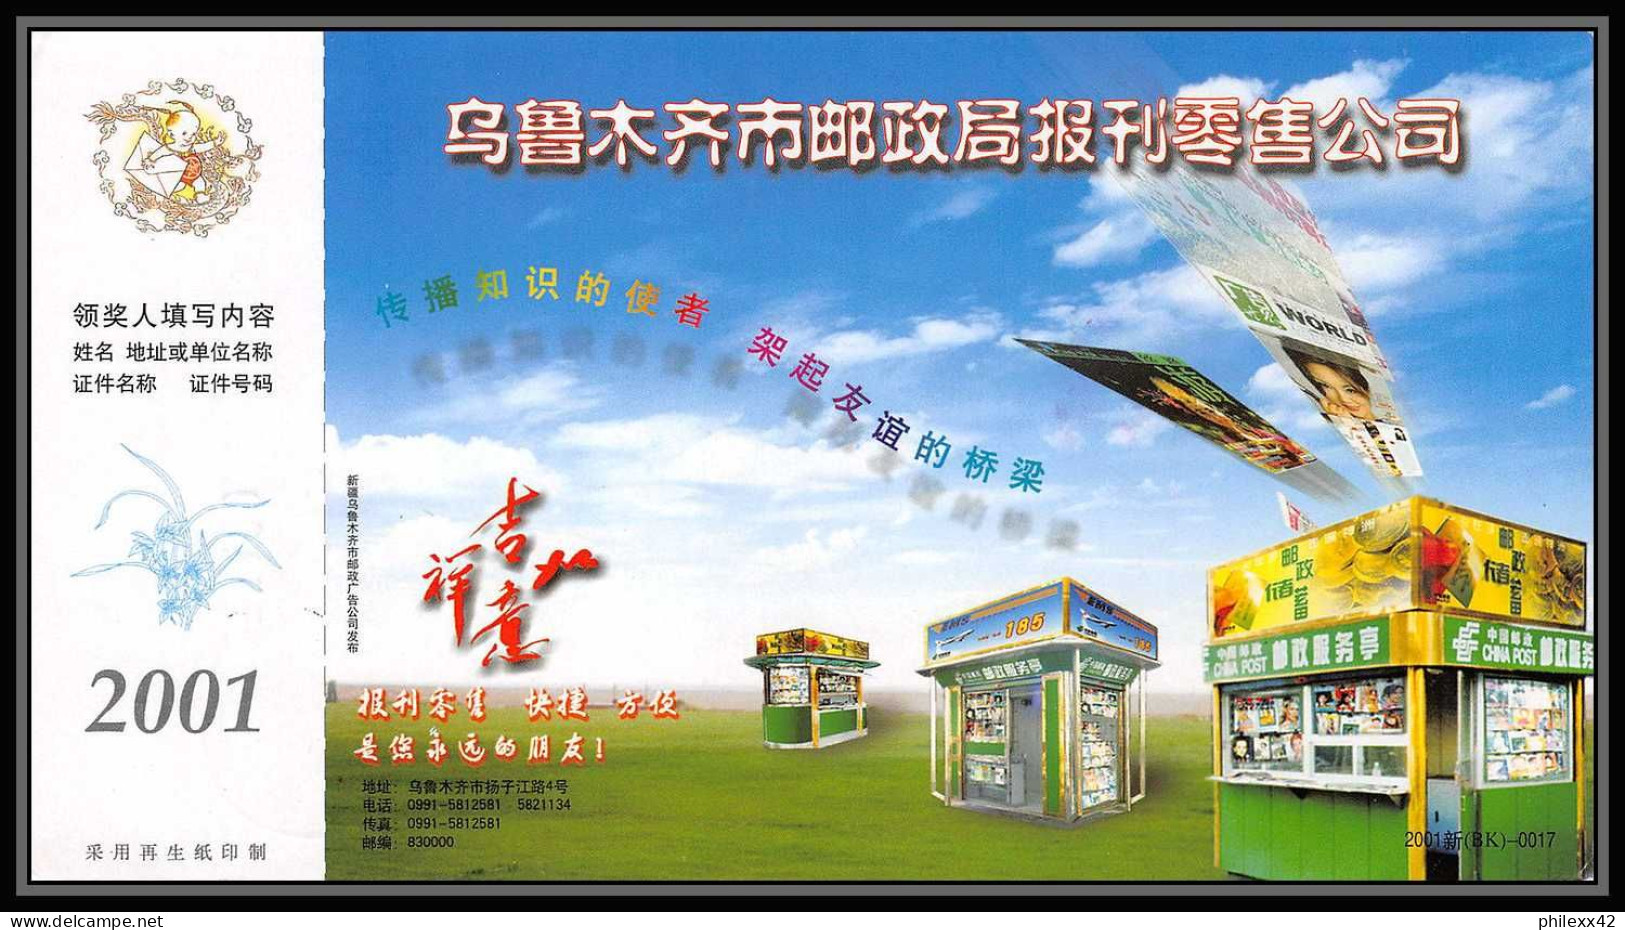 1358 Espace (space Raumfahrt) Entier Postal (Stamped Stationery) CHINE (china) SHENZHOU 6 Junlong / Haisheng 17/10/2005 - Asien